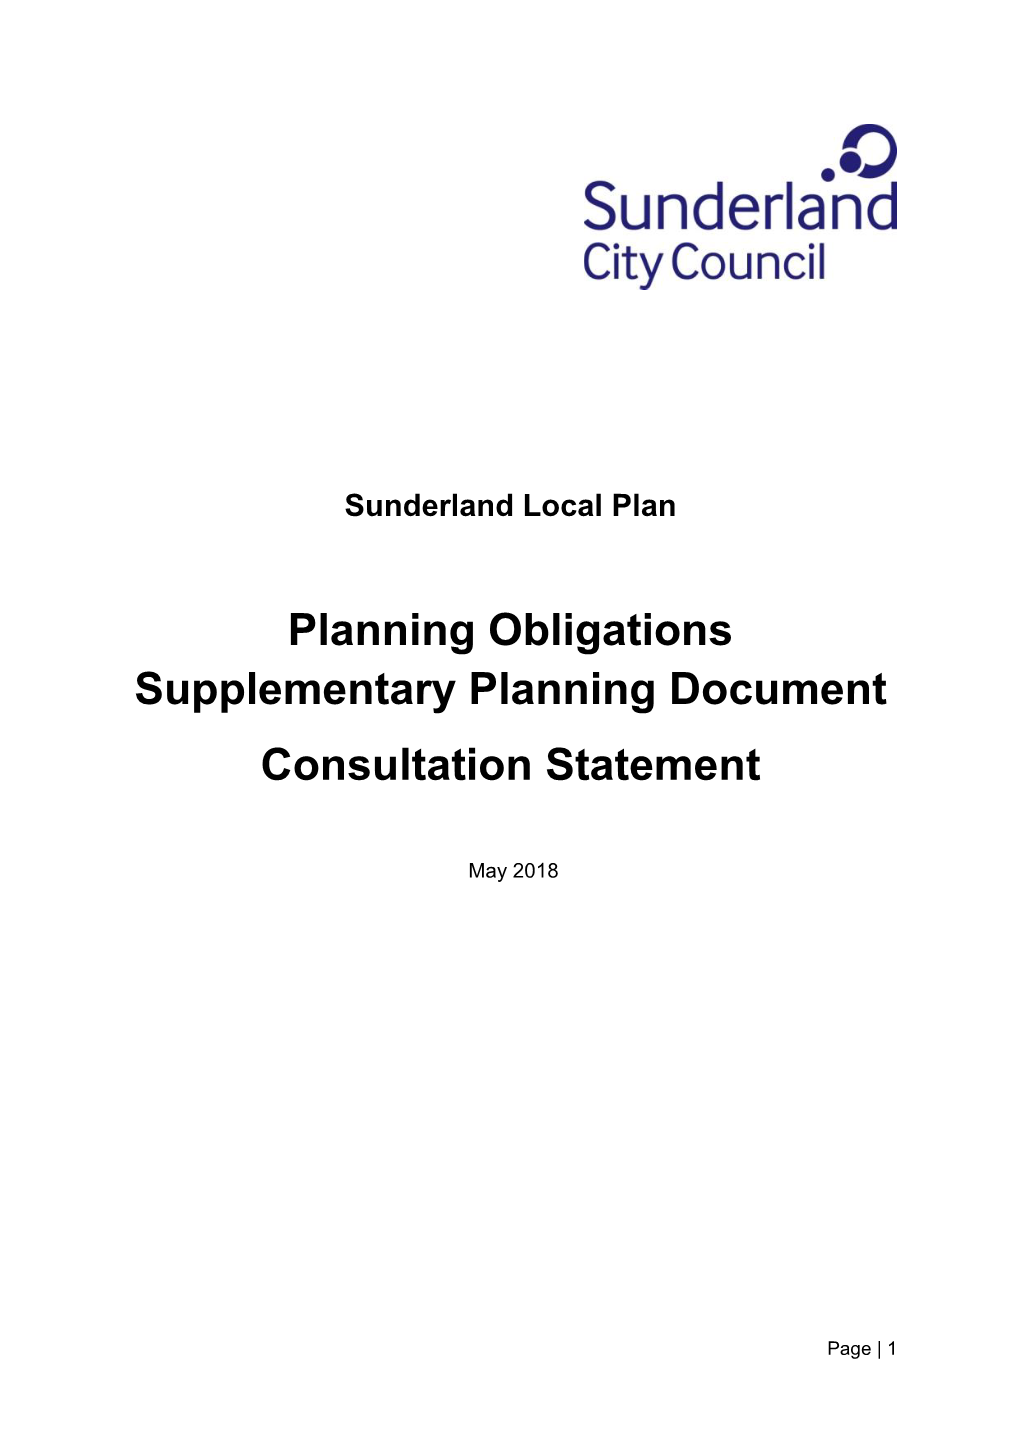 Planning Obligations Supplementary Planning Document Consultation Statement